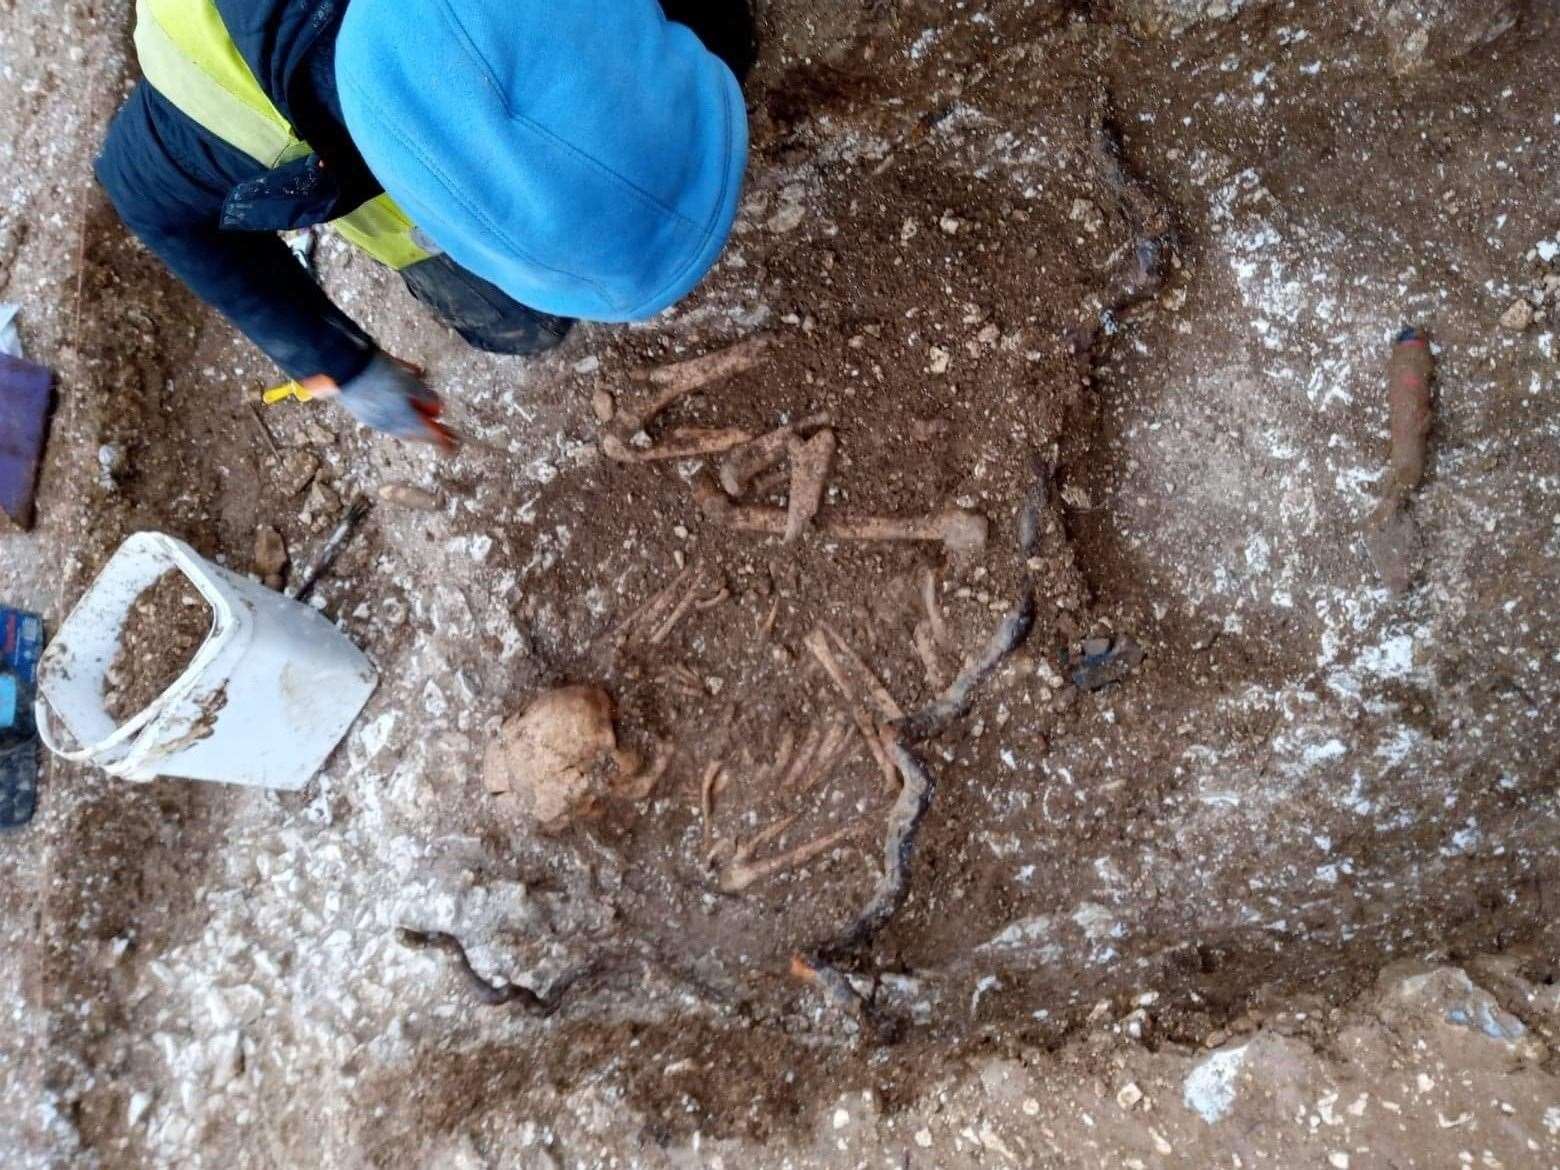 One of the skeletons found at Aylesham (29011957)